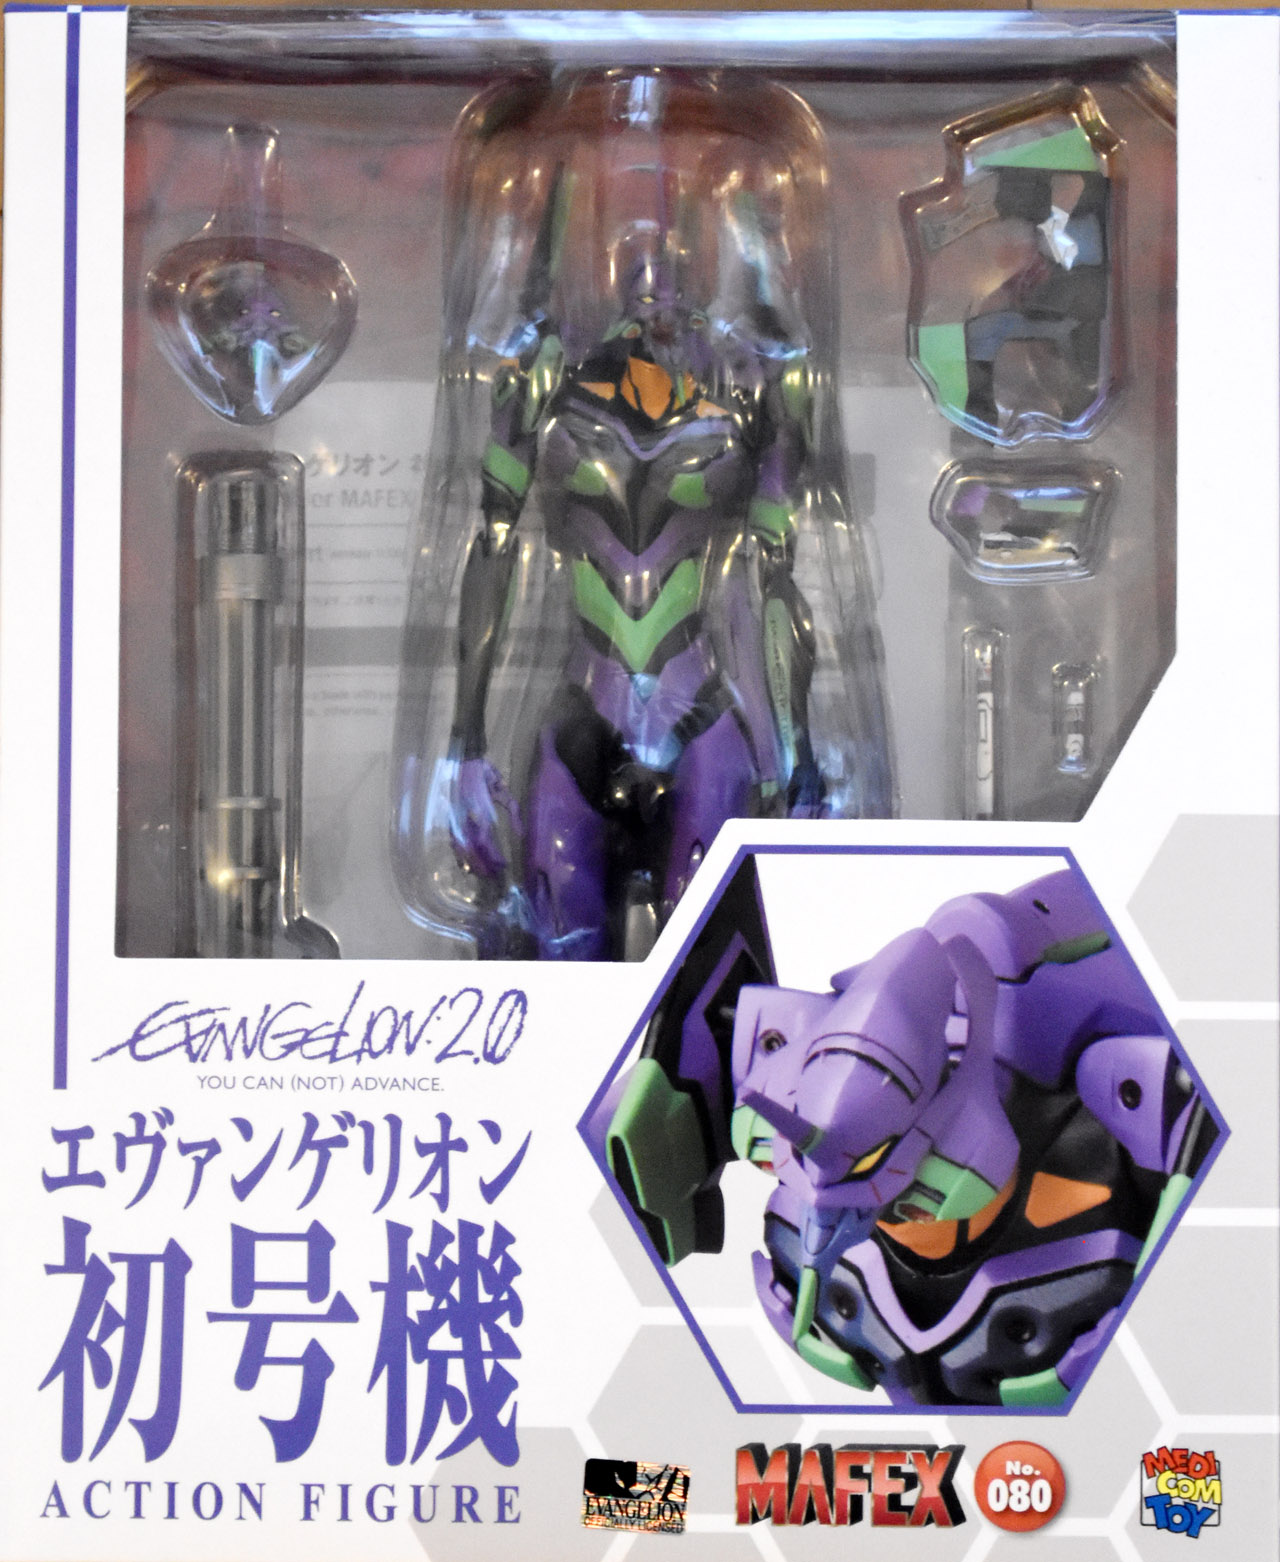 MEDICOM Toy MAFEX 080 Evangelion Eva Unit 01 Action Figure for sale online